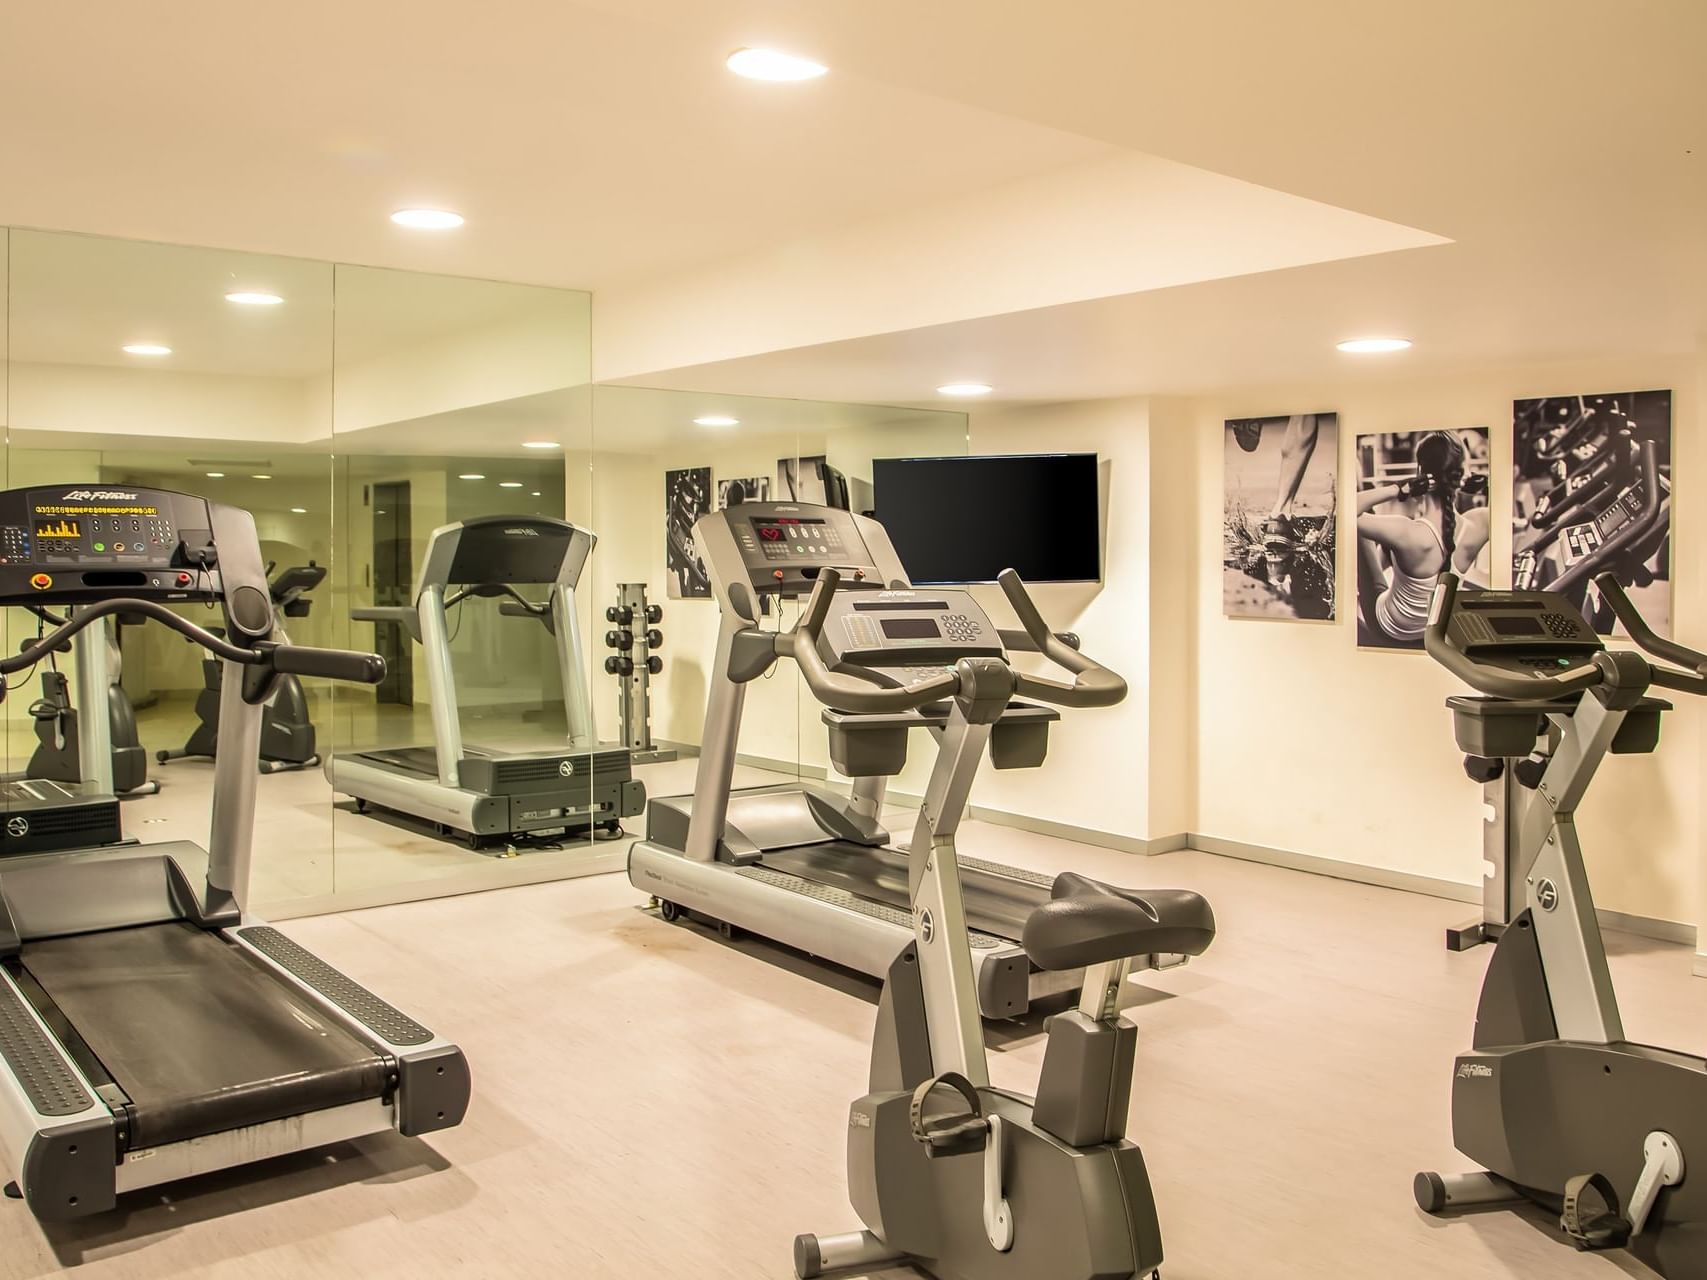 Treadmills in the Gym Wellness Center at Fiesta Inn Hotels